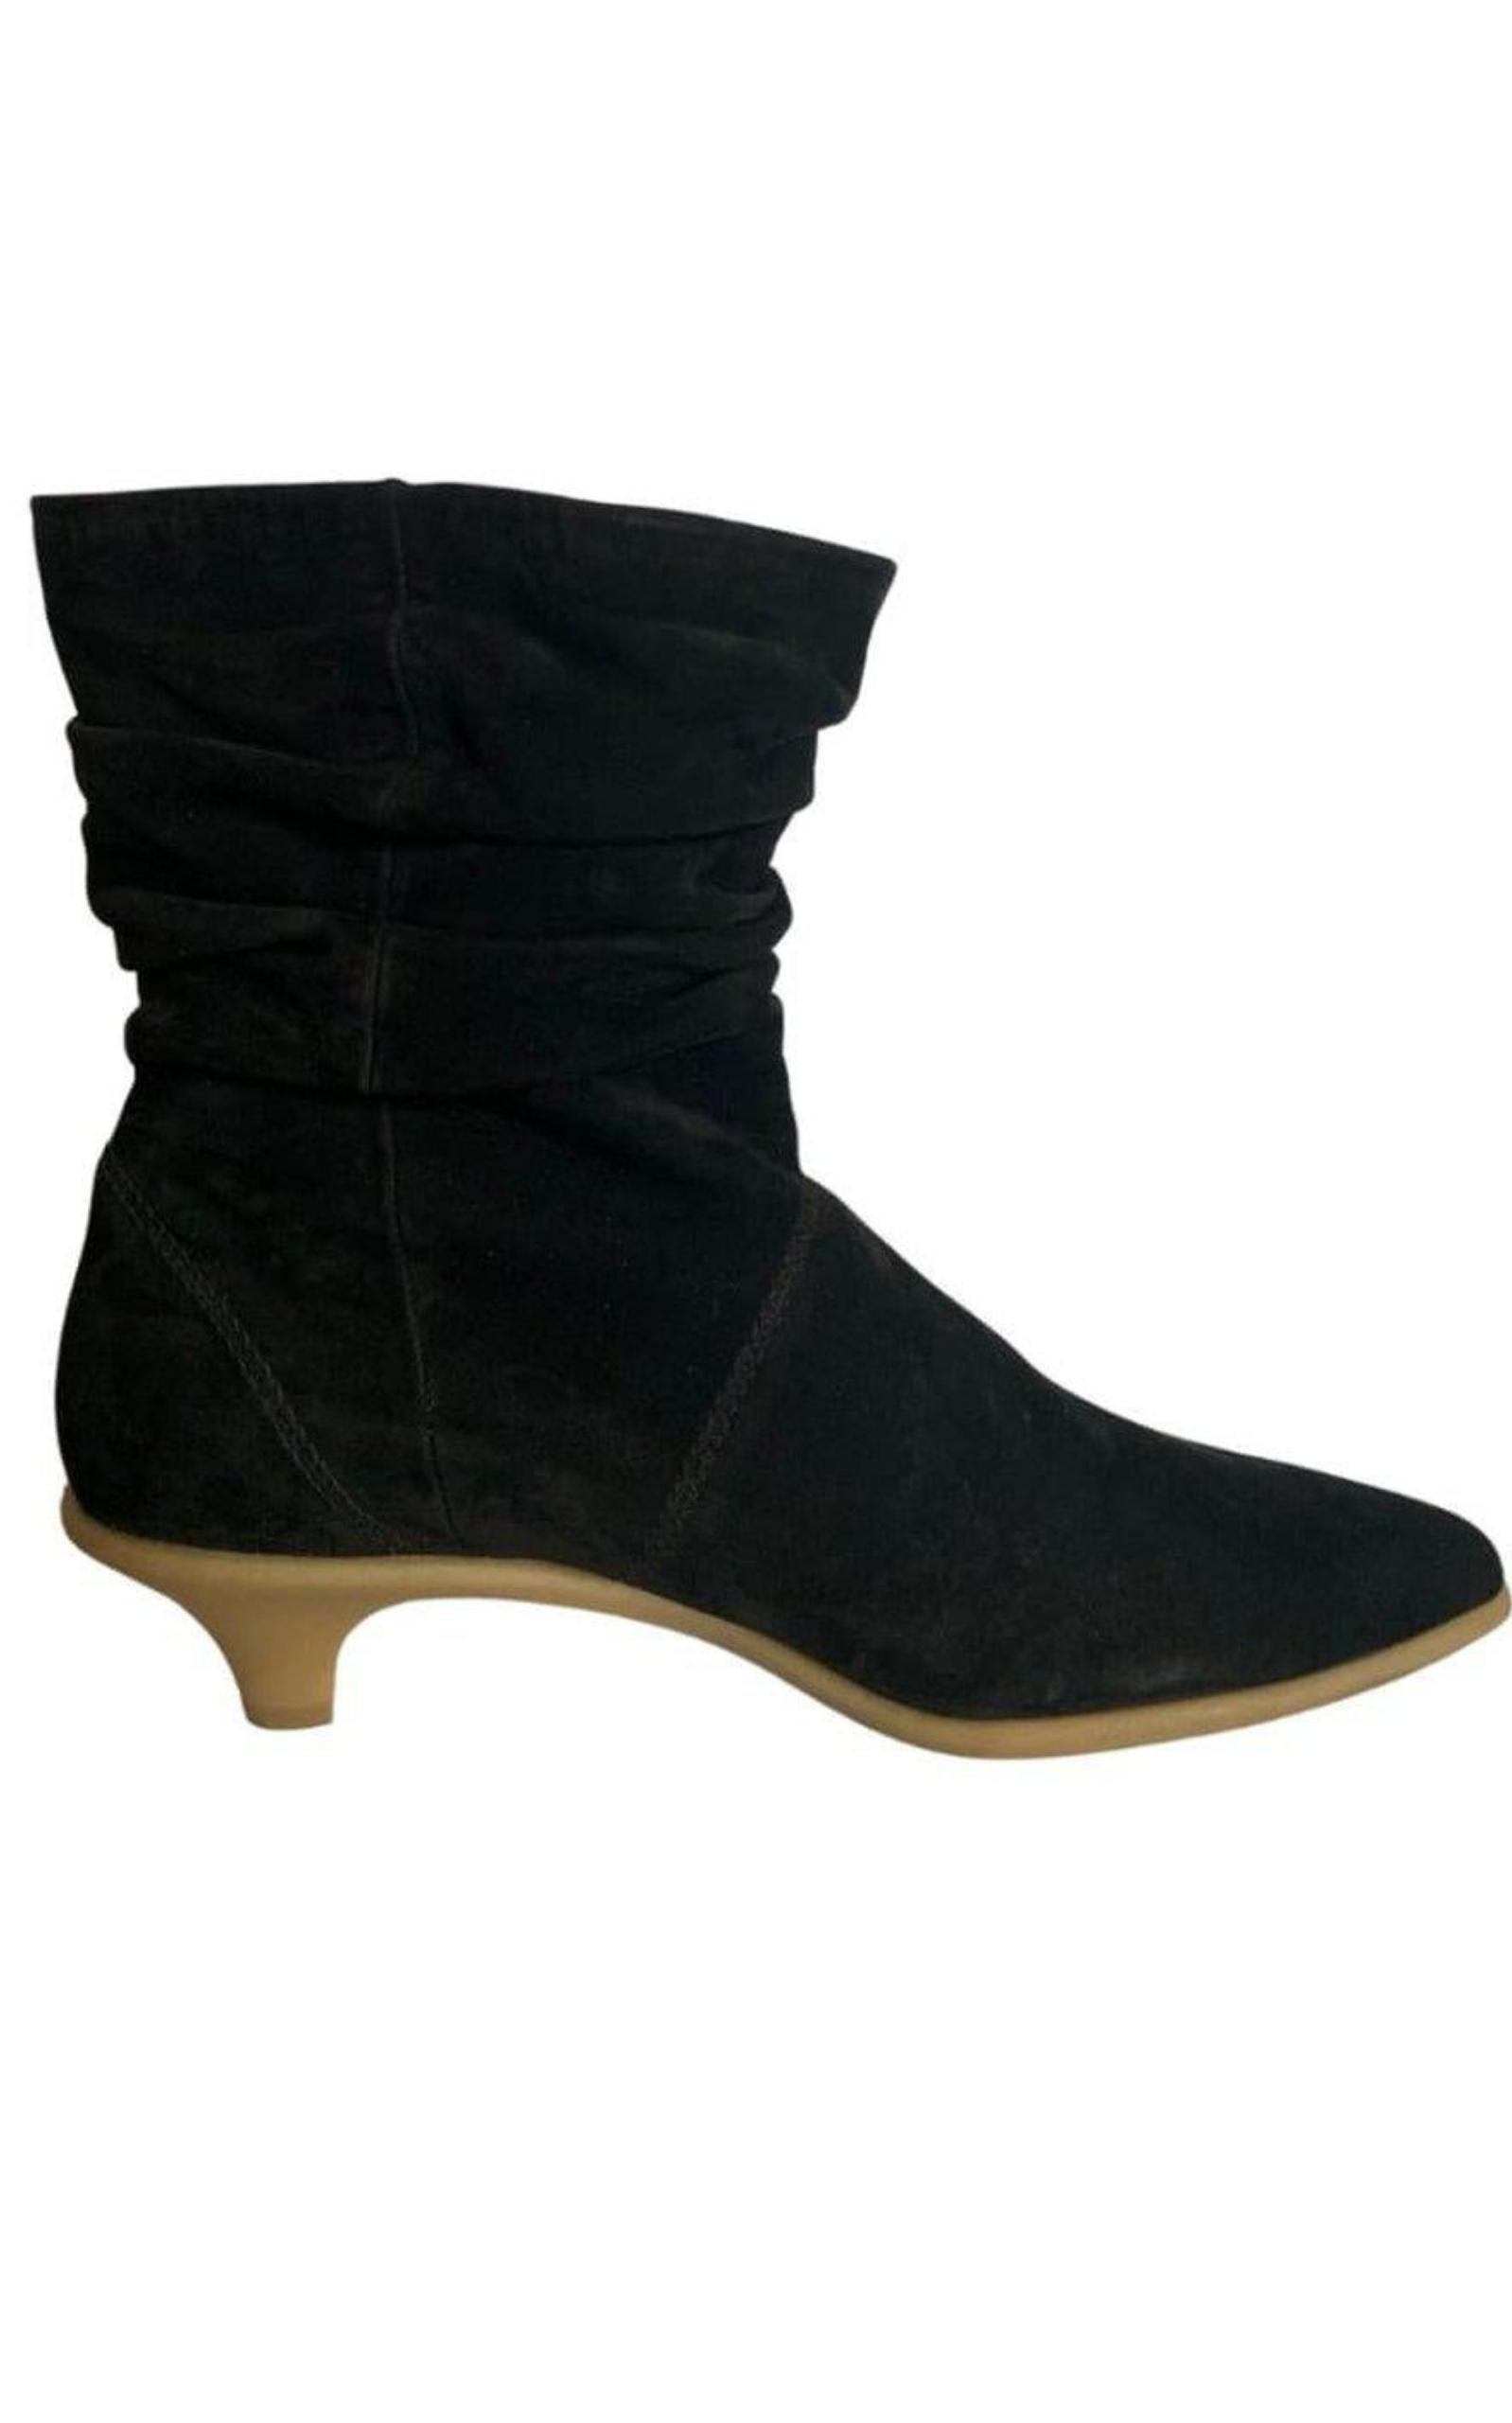  BCBGMAXAZRIABlack Comfortable Leather Boots - Runway Catalog